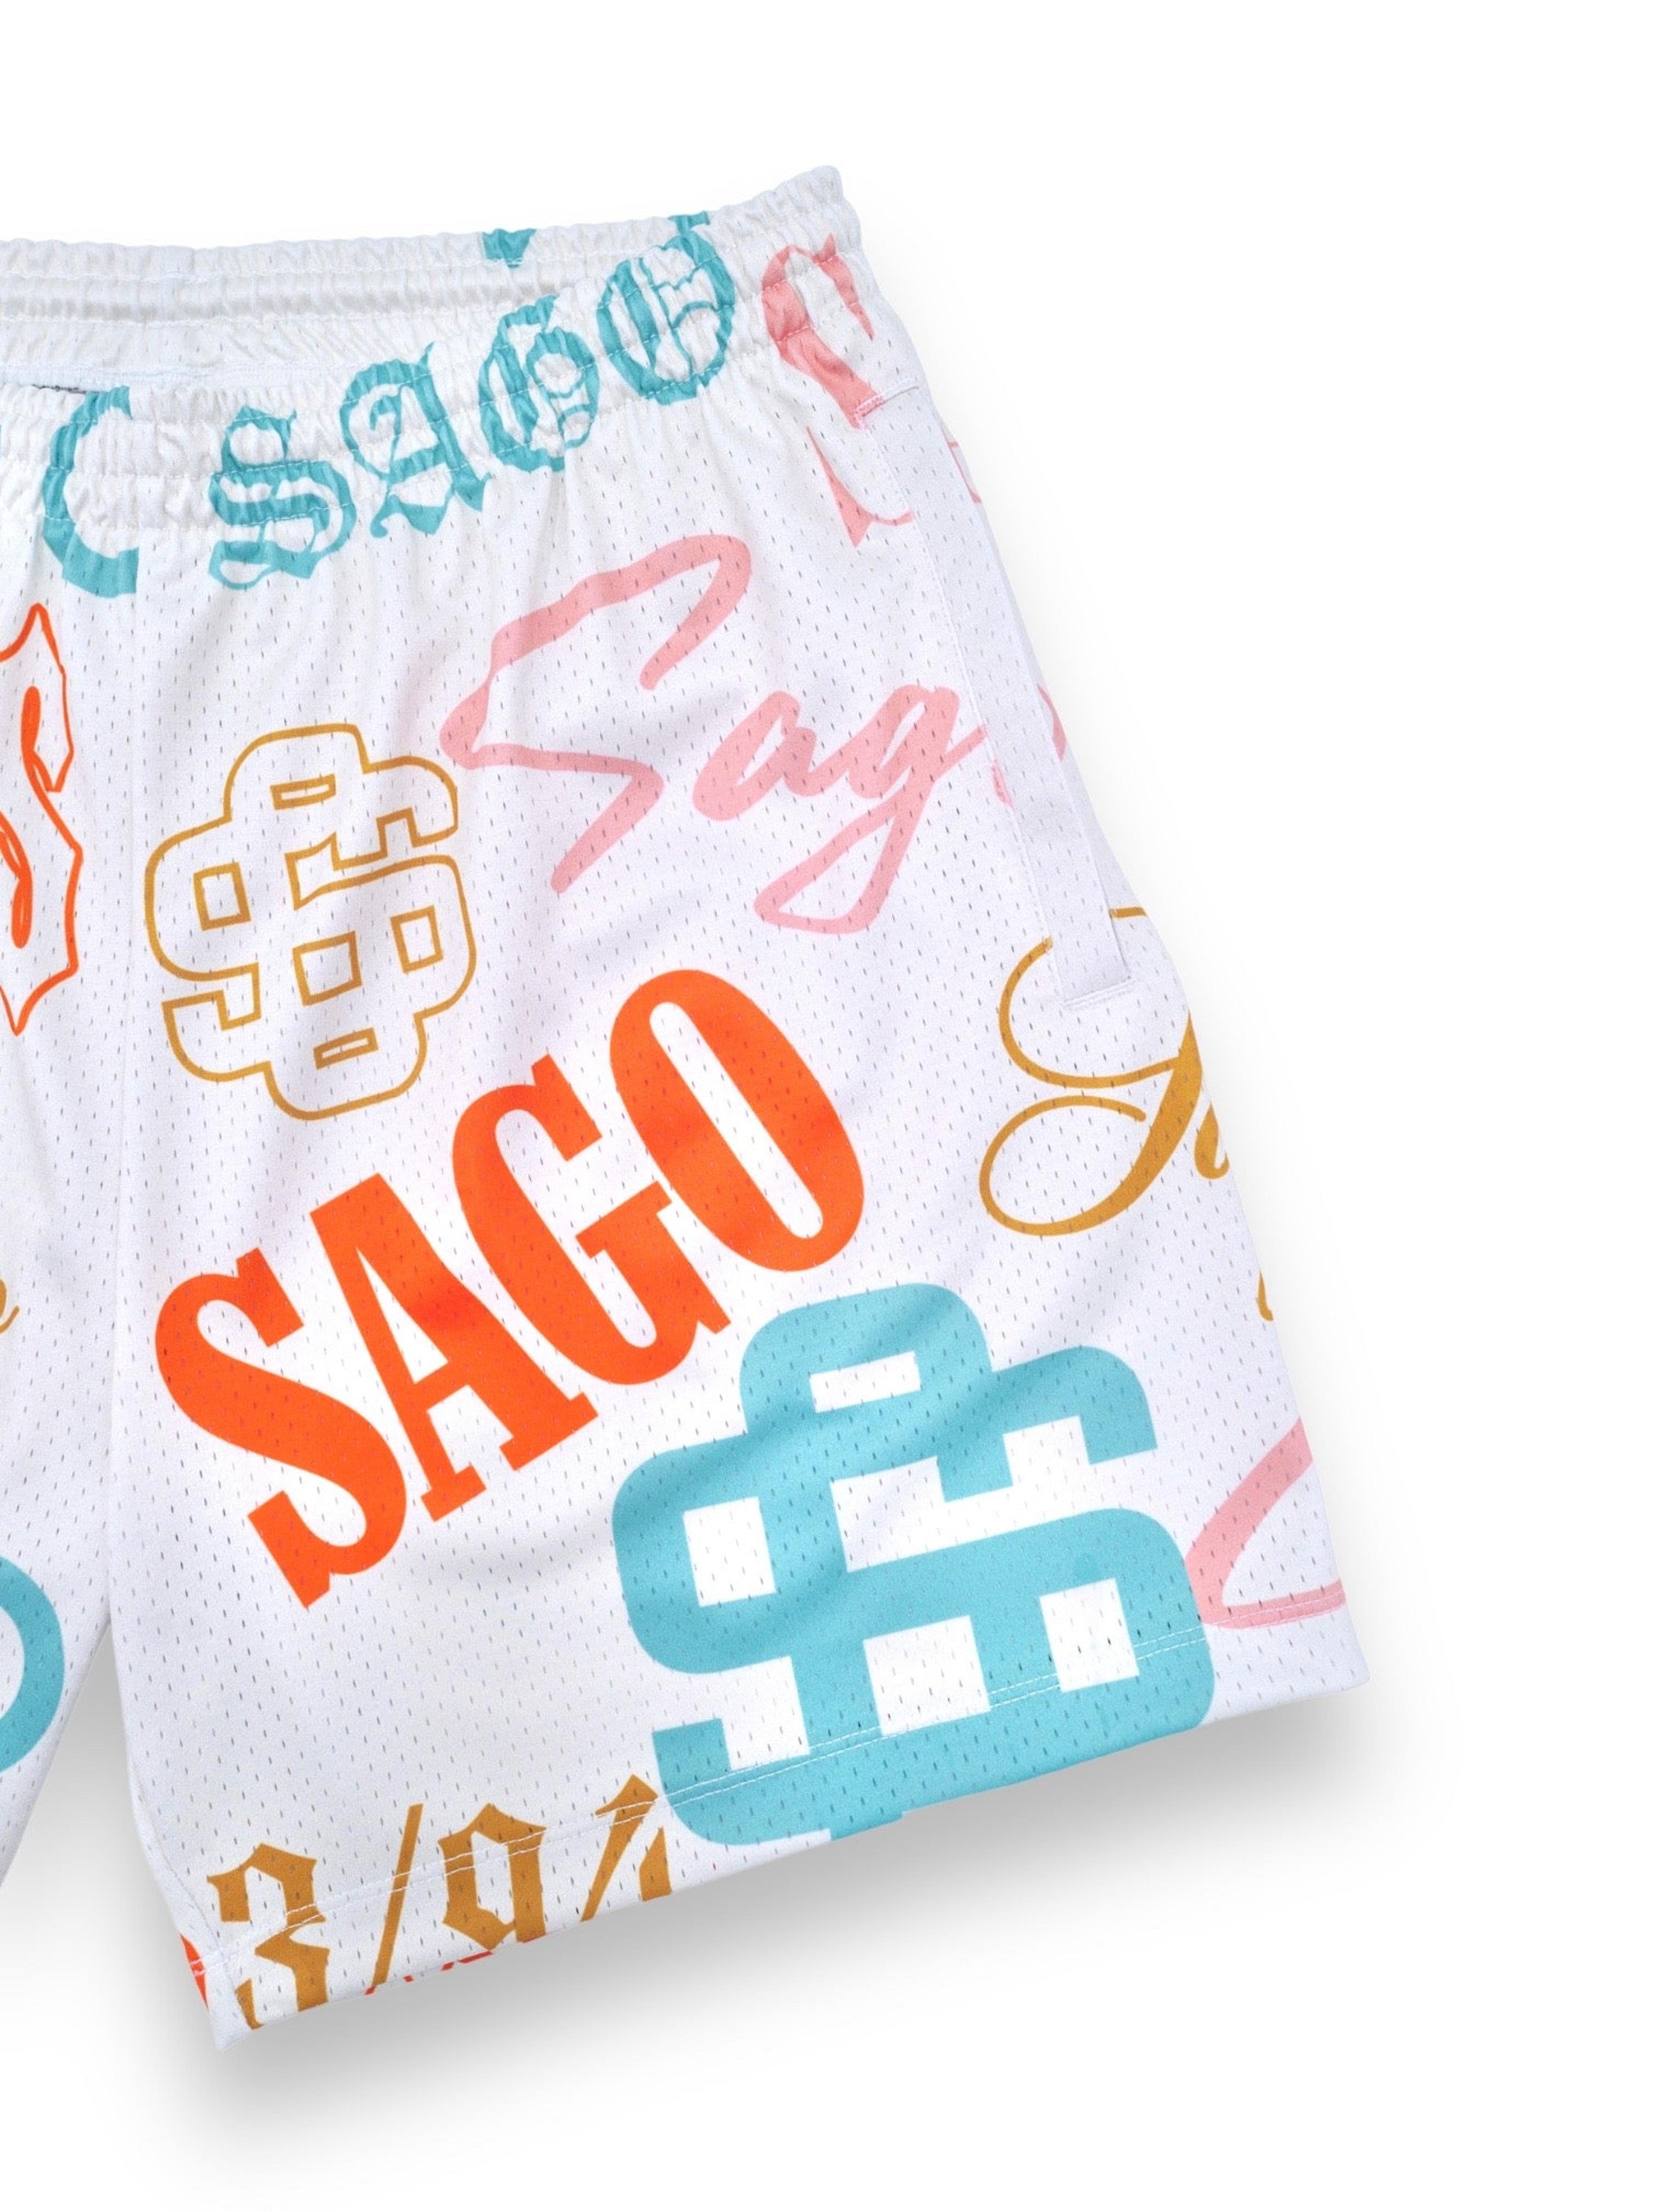 Alternate View 2 of Sago logo shorts (multicolor)